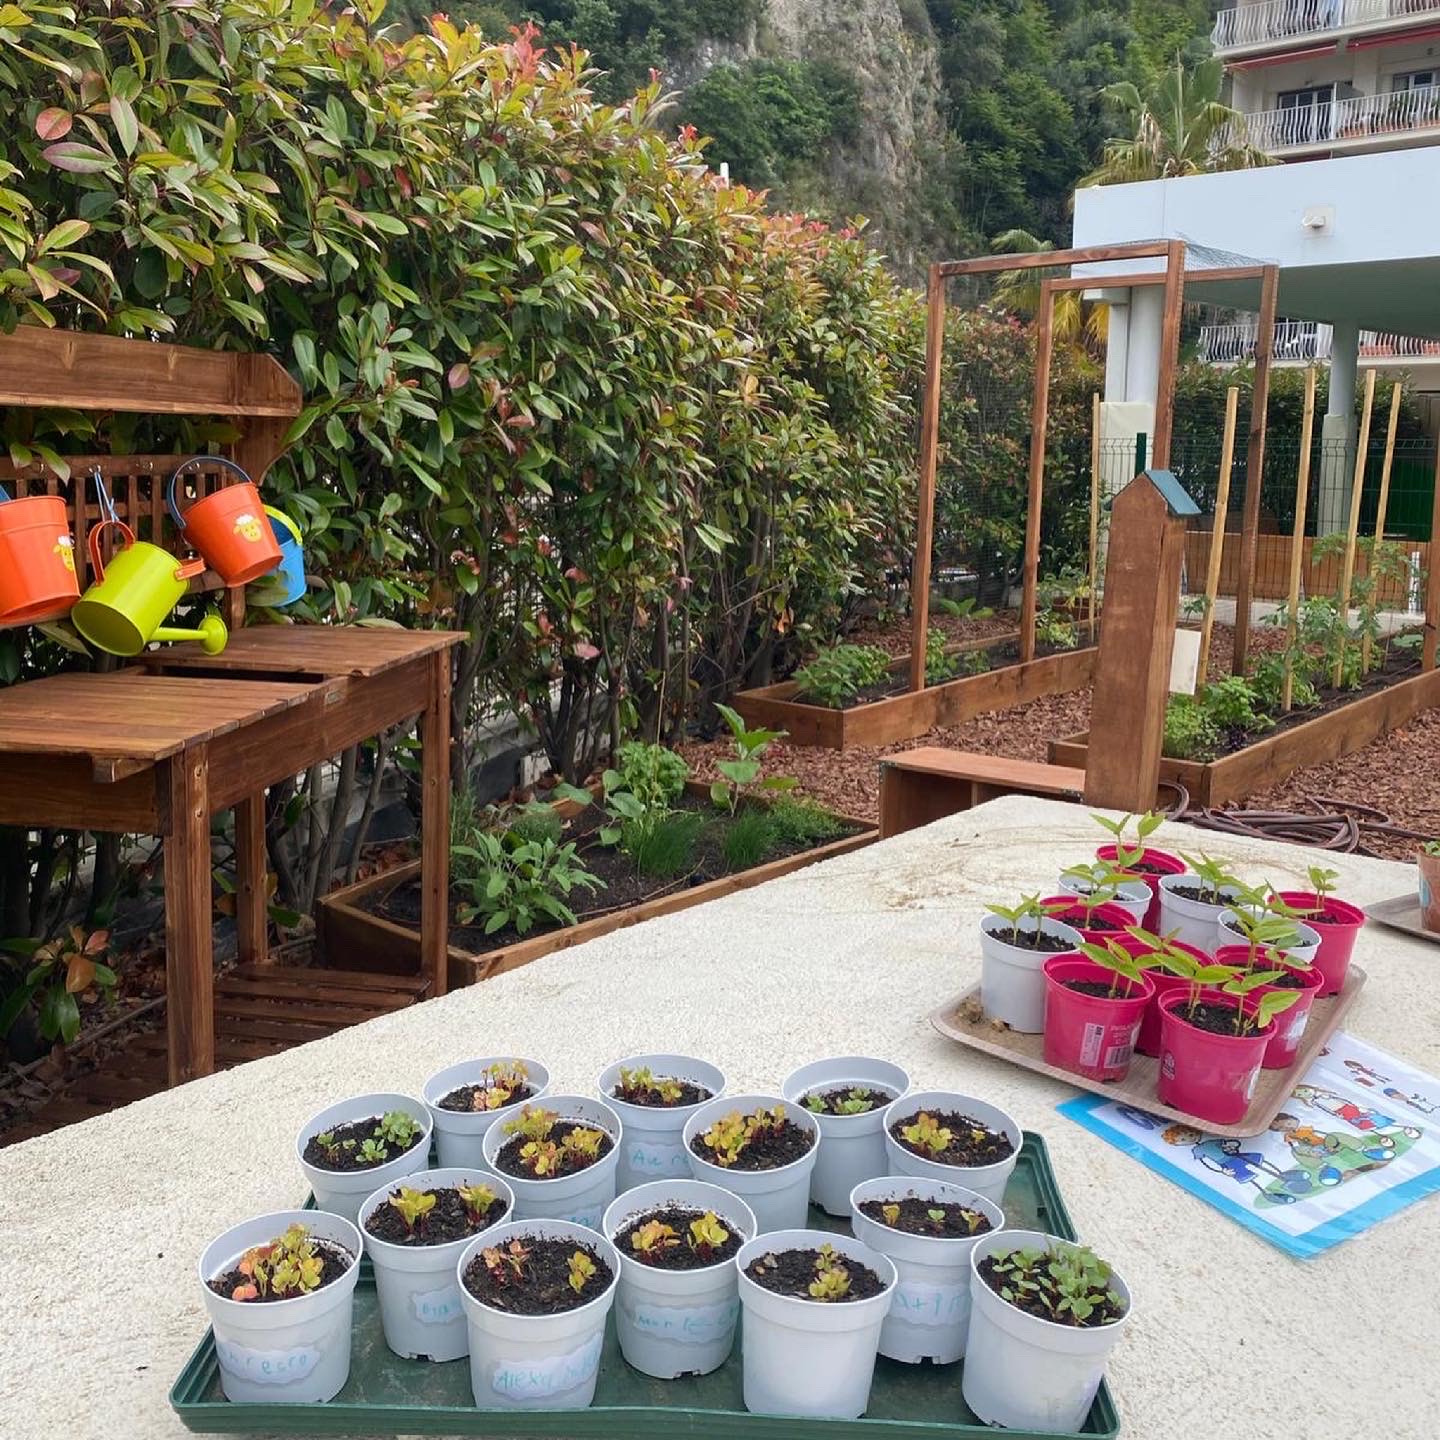 Early Years School inaugurates organic garden Image